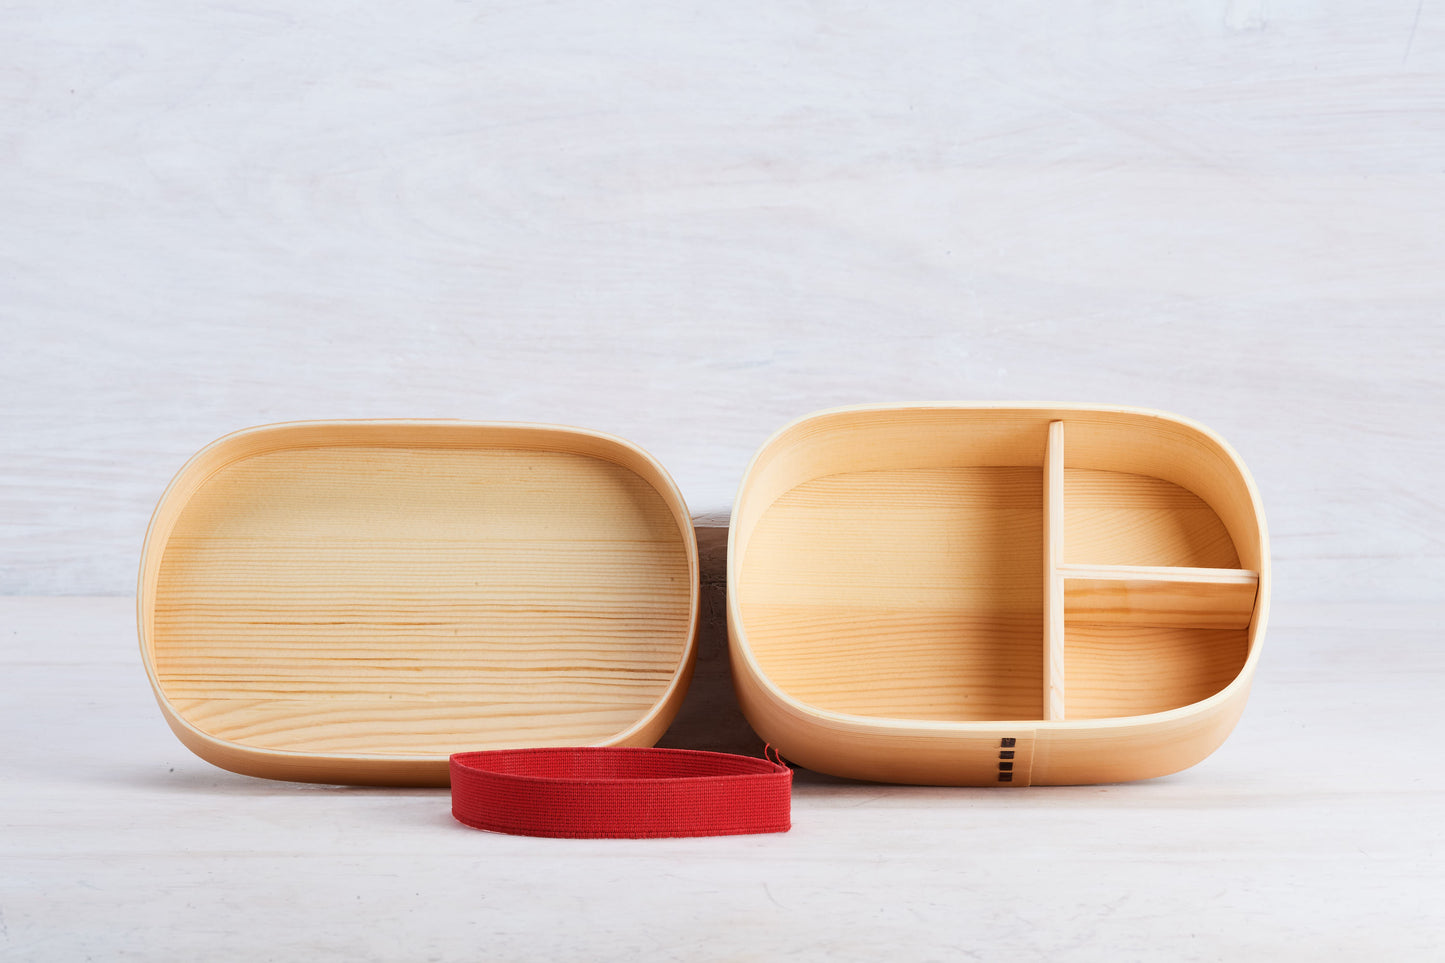 Wooden Bento Box